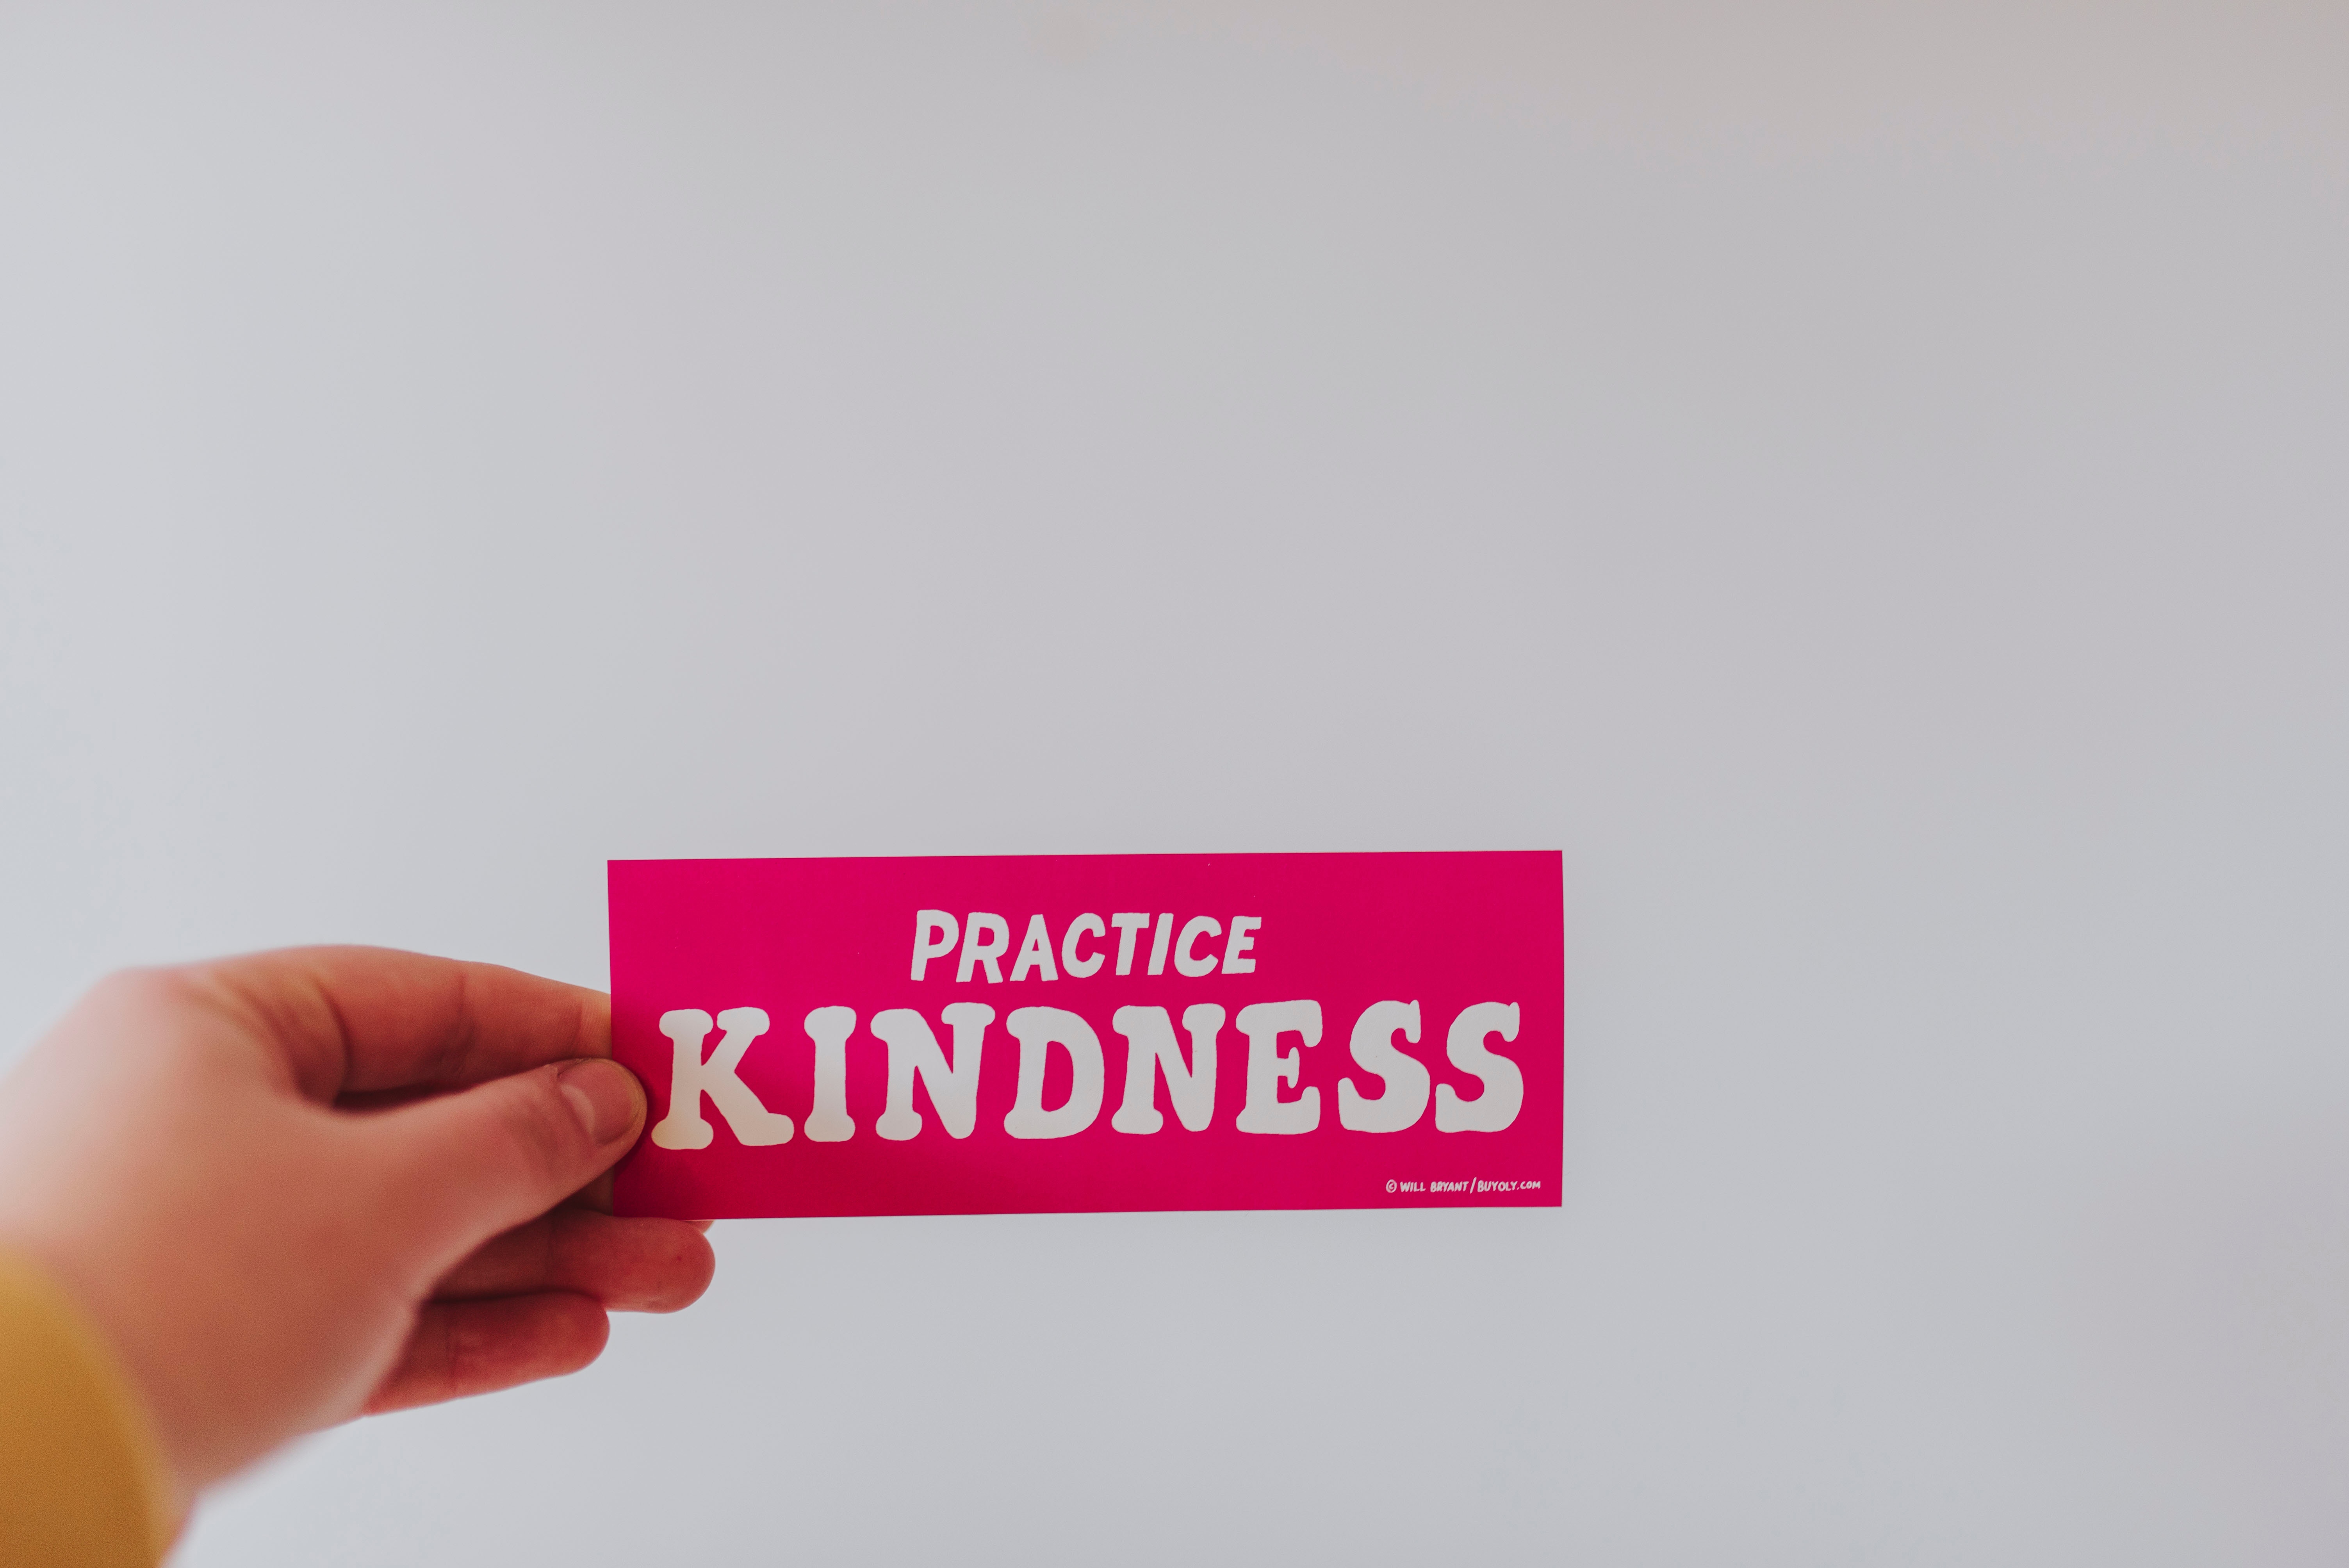 Practice kindness.